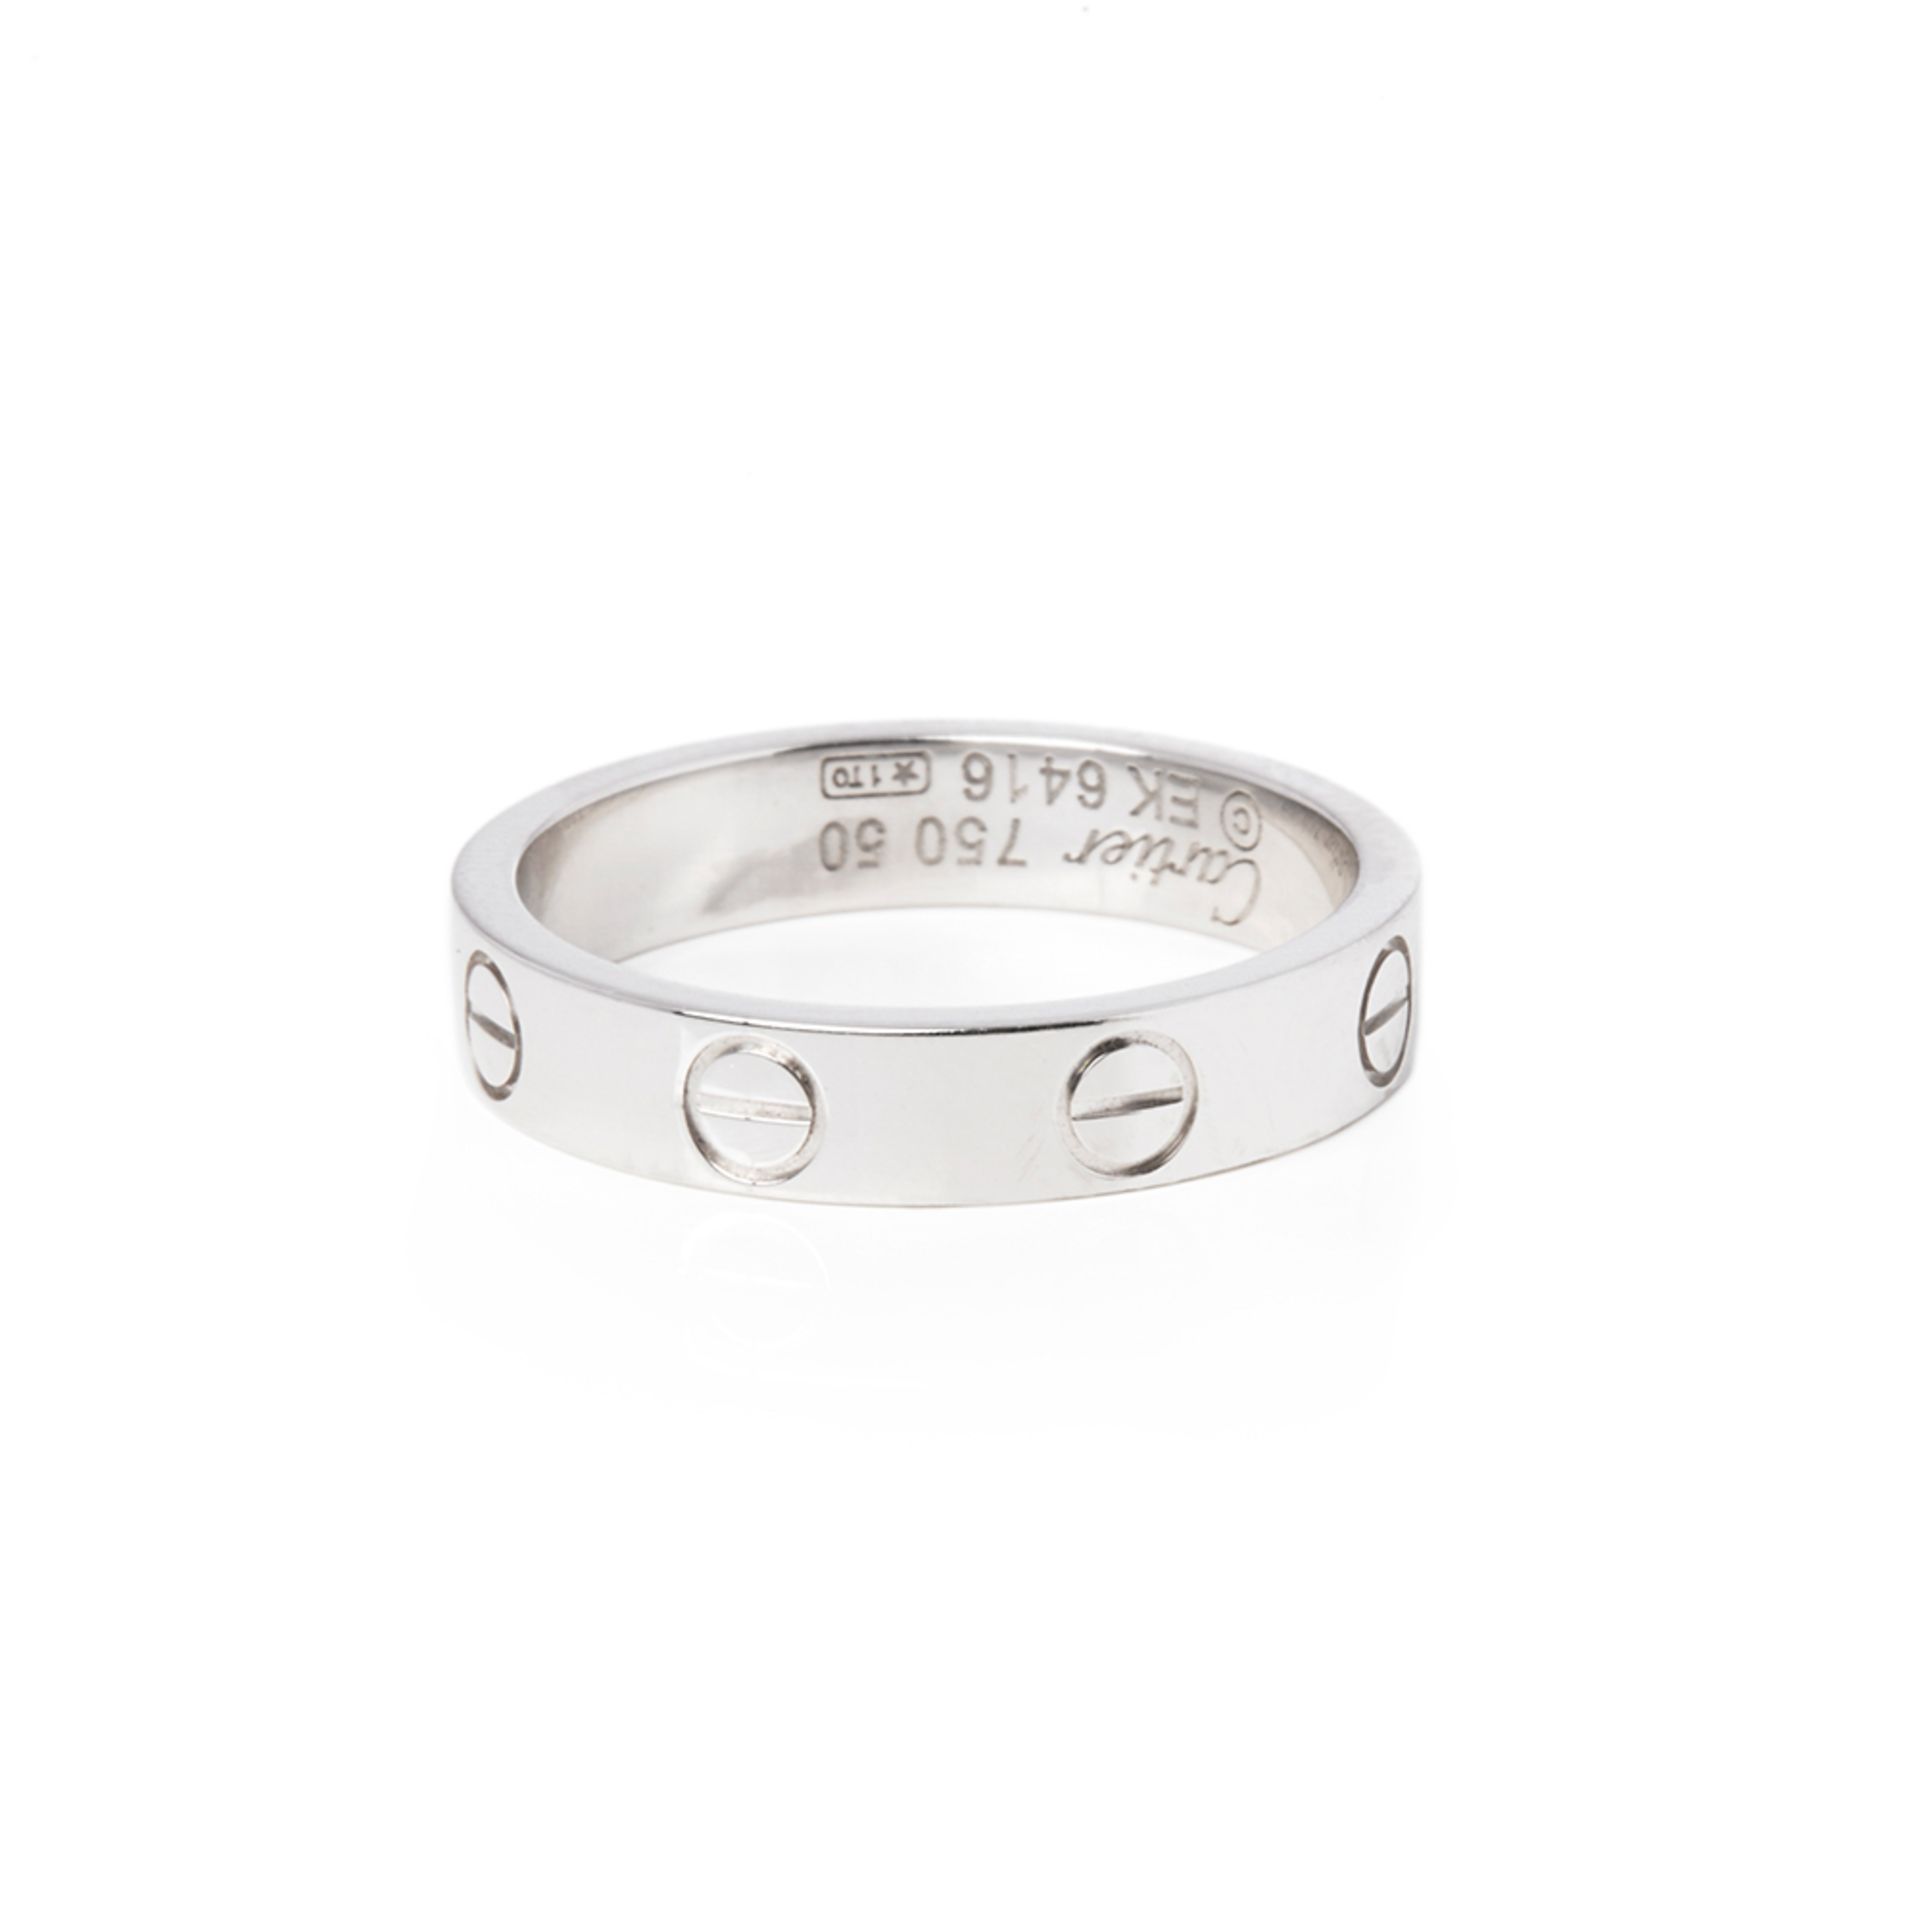 Cartier 18k White Gold Mini Love Ring - Image 4 of 7